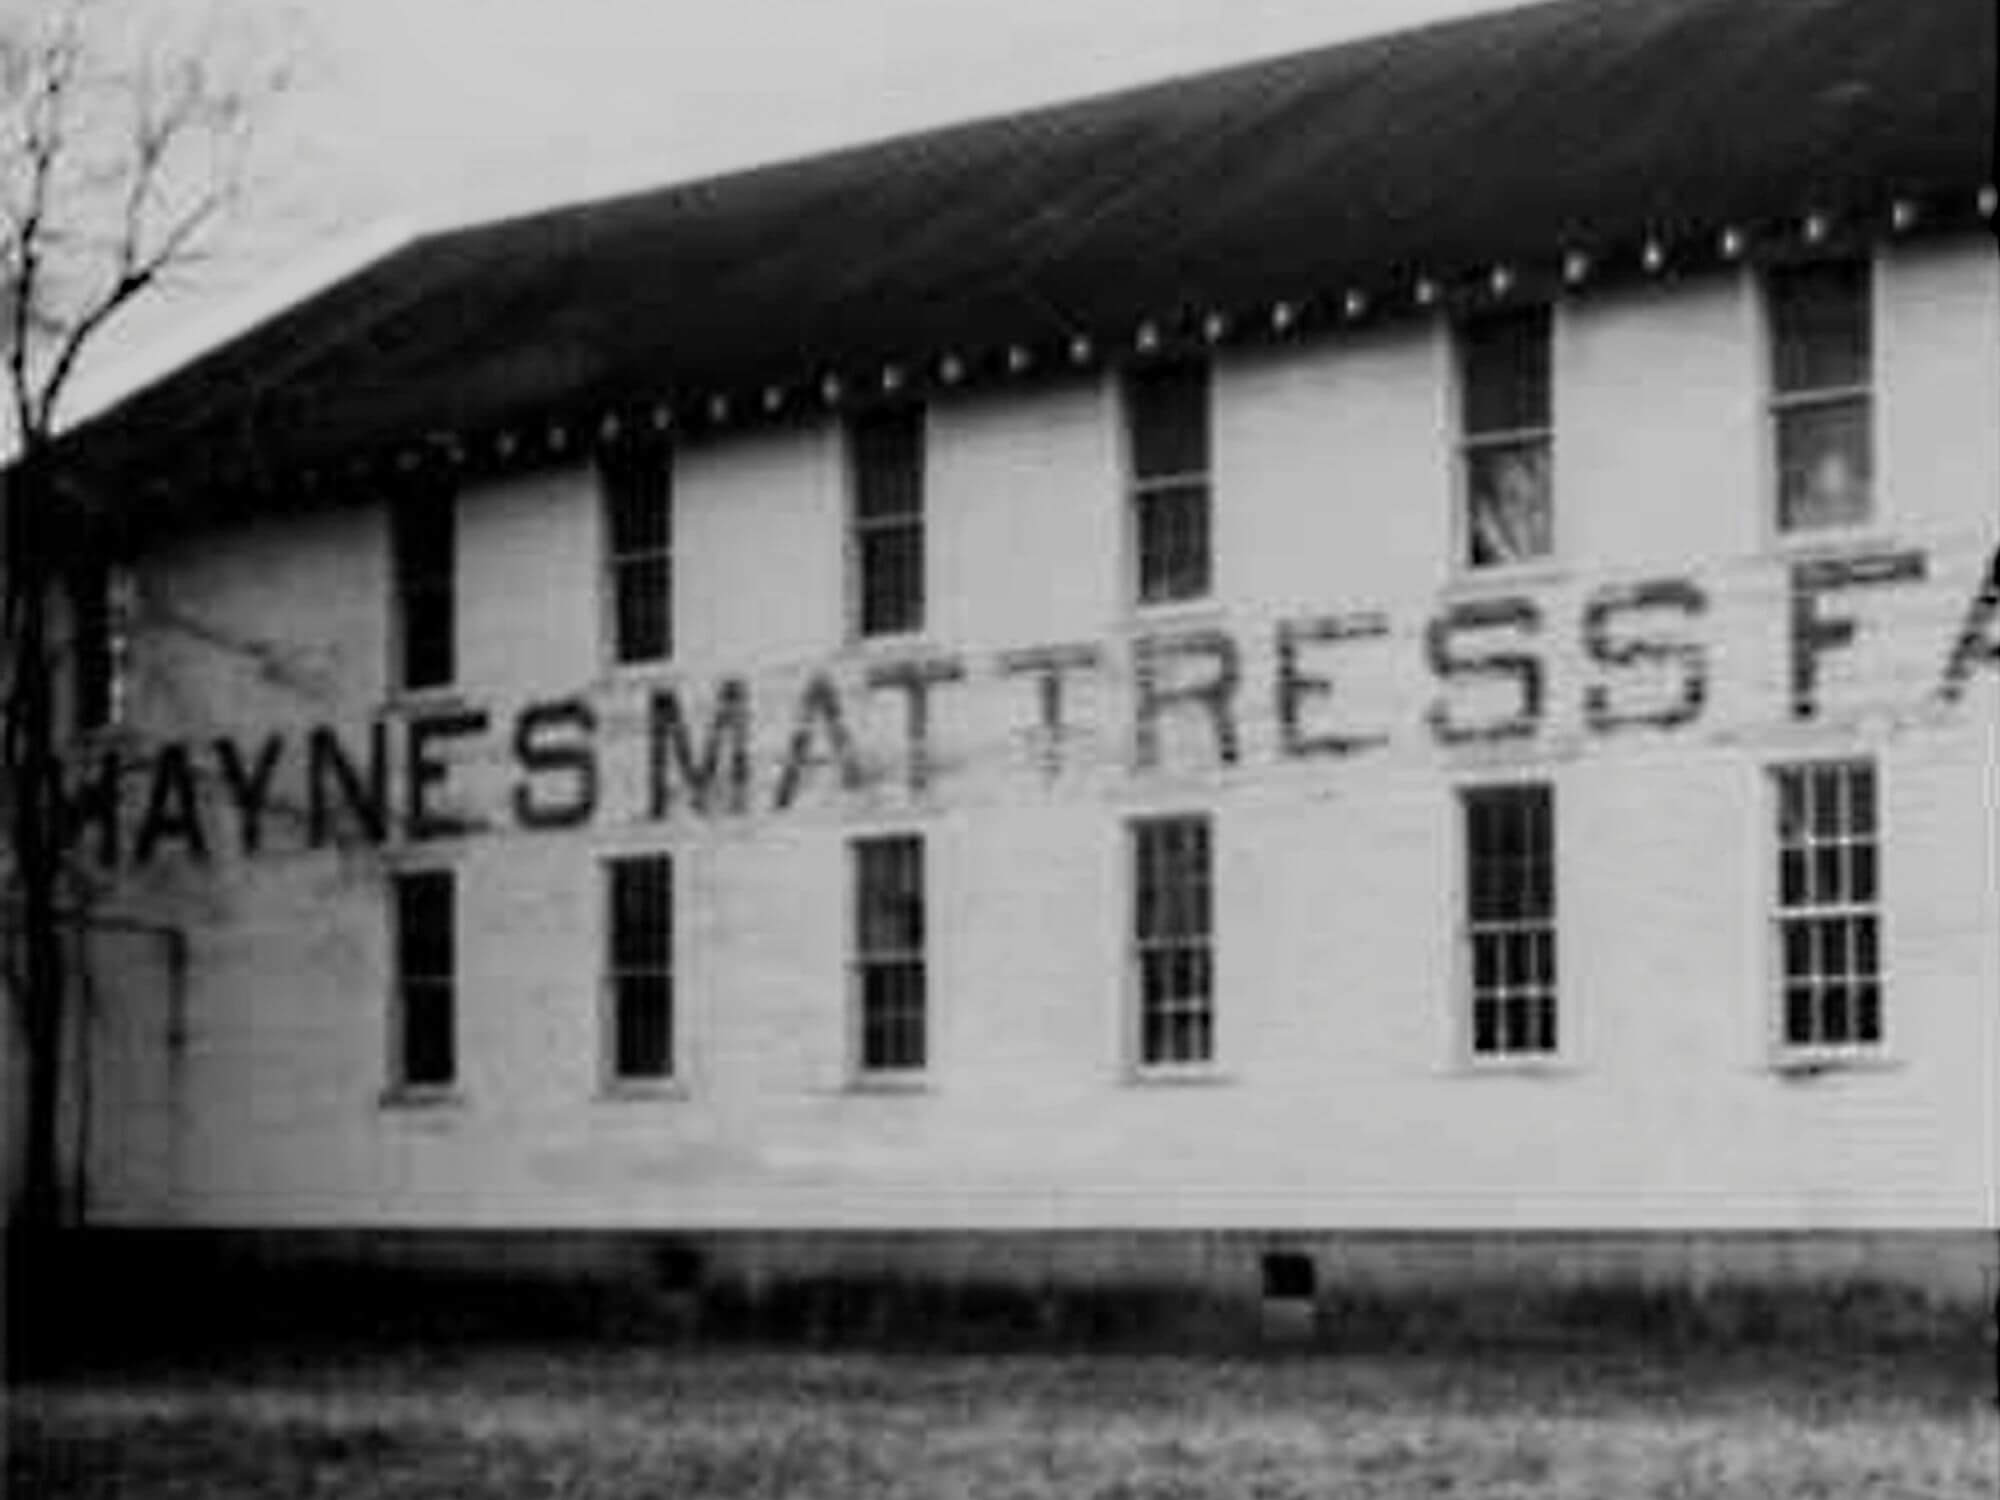 Haynes Mattress Factory